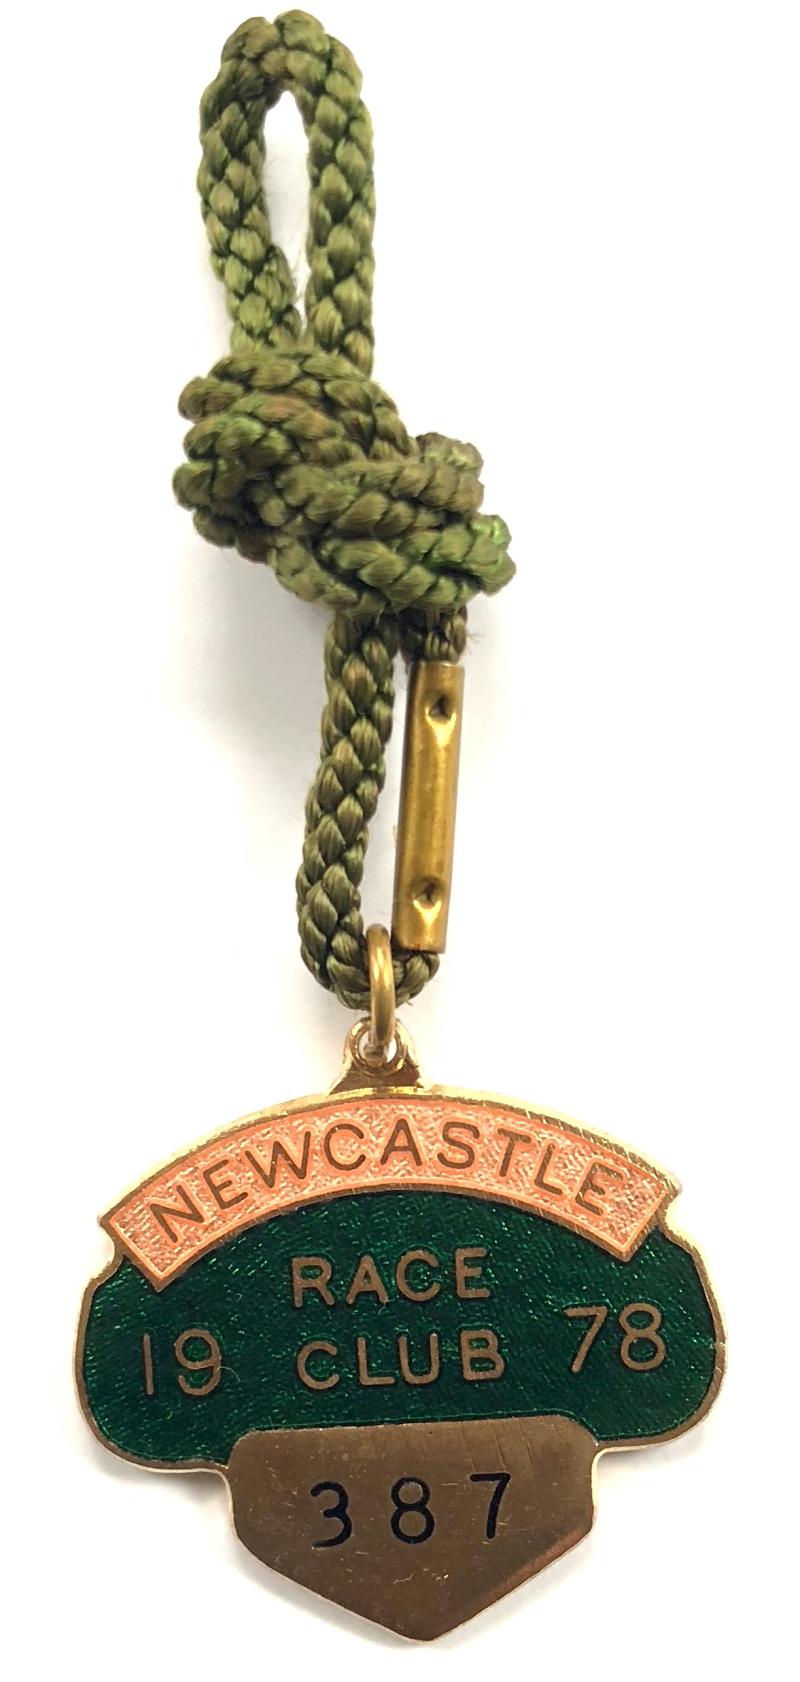 1978 Newcastle Race Club horse racing badge